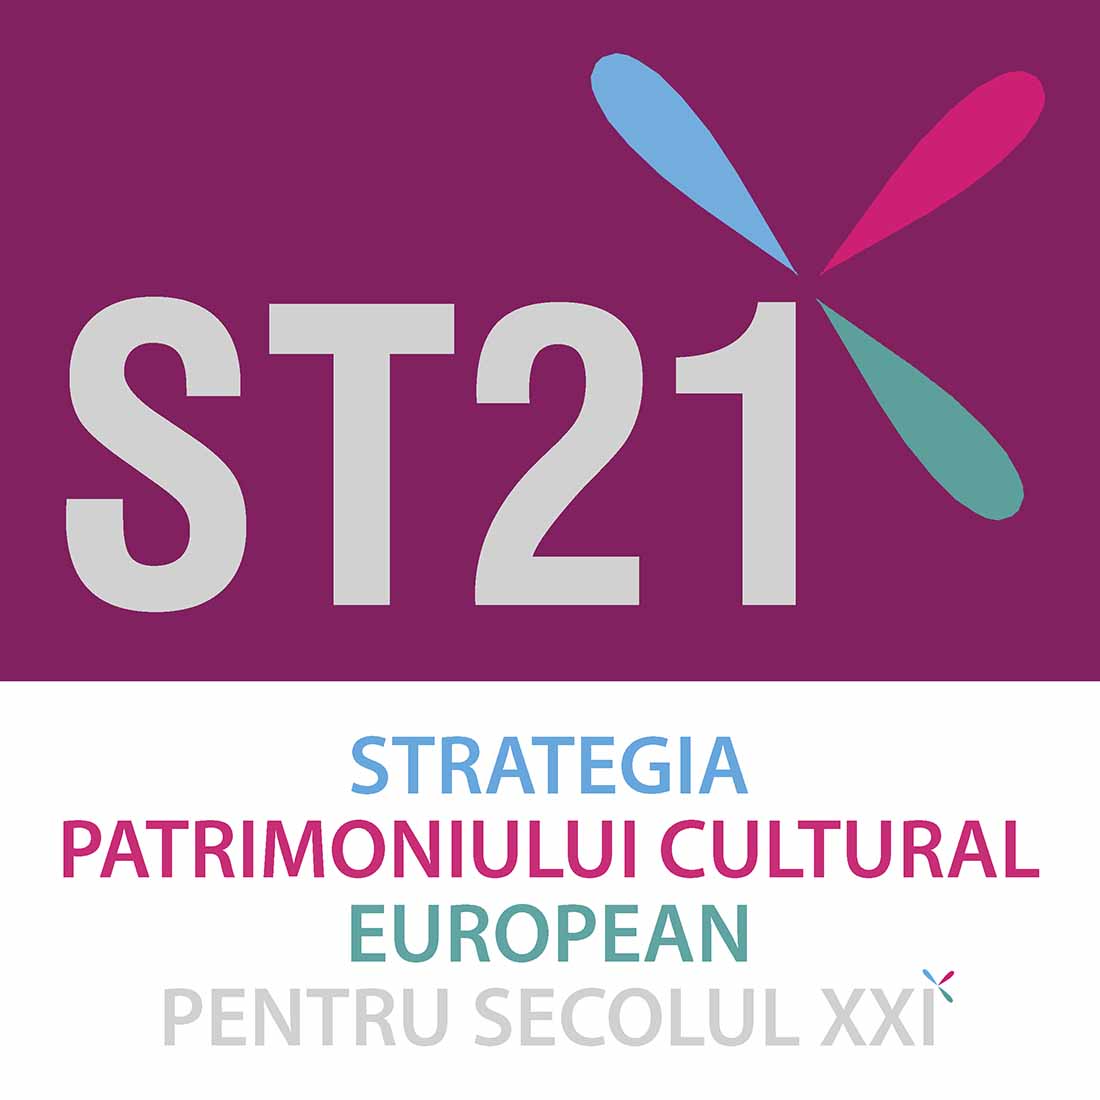 ST21-ROMANA